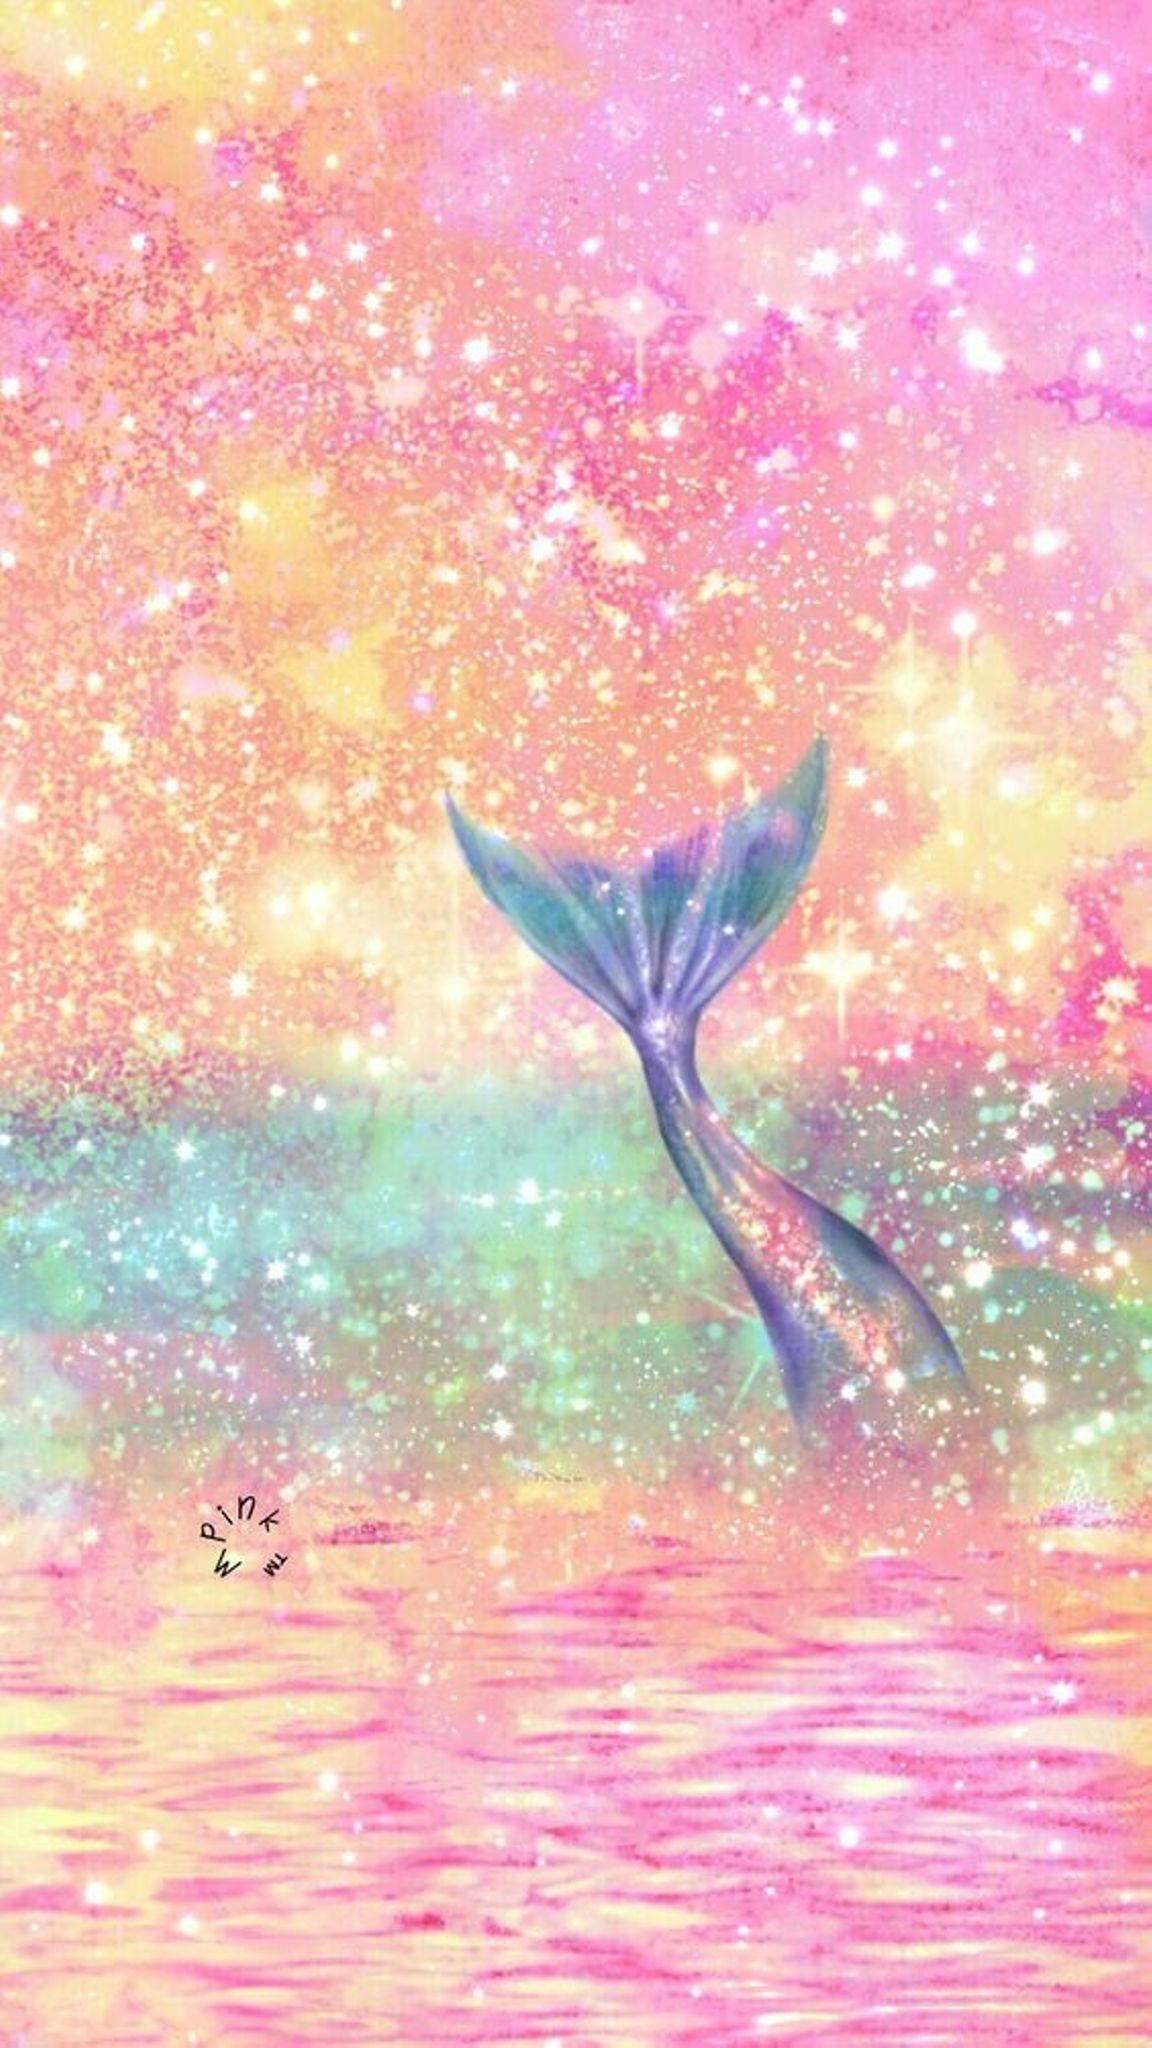 mermaid wallpaper for iphone,pink,purple,sky,plant,illustration